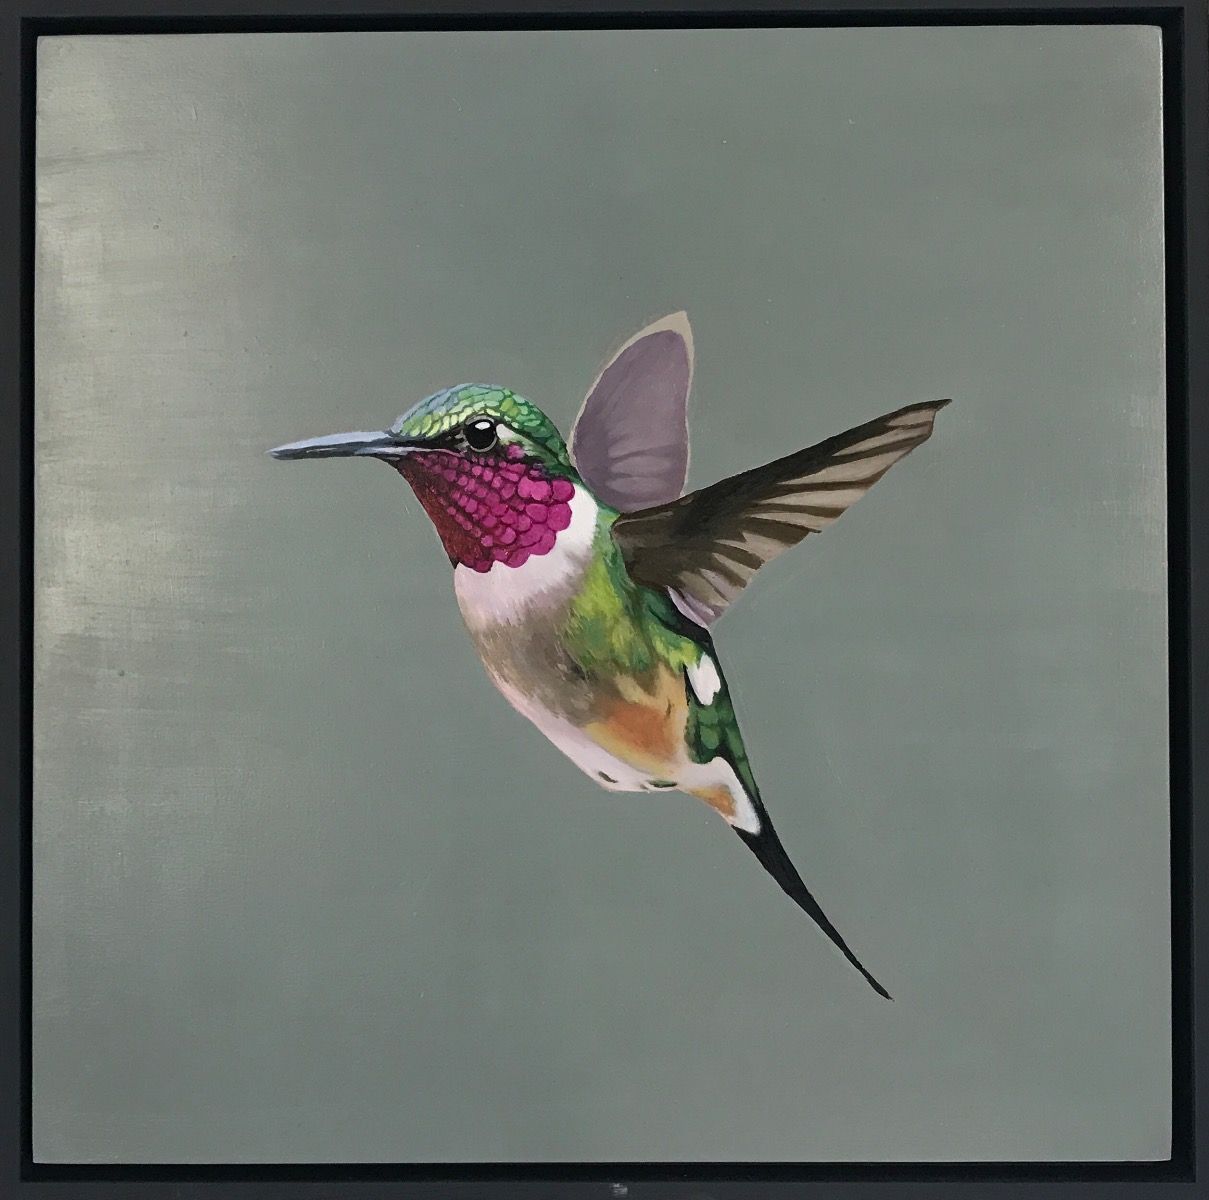 Single hummingbird by Angela Smith